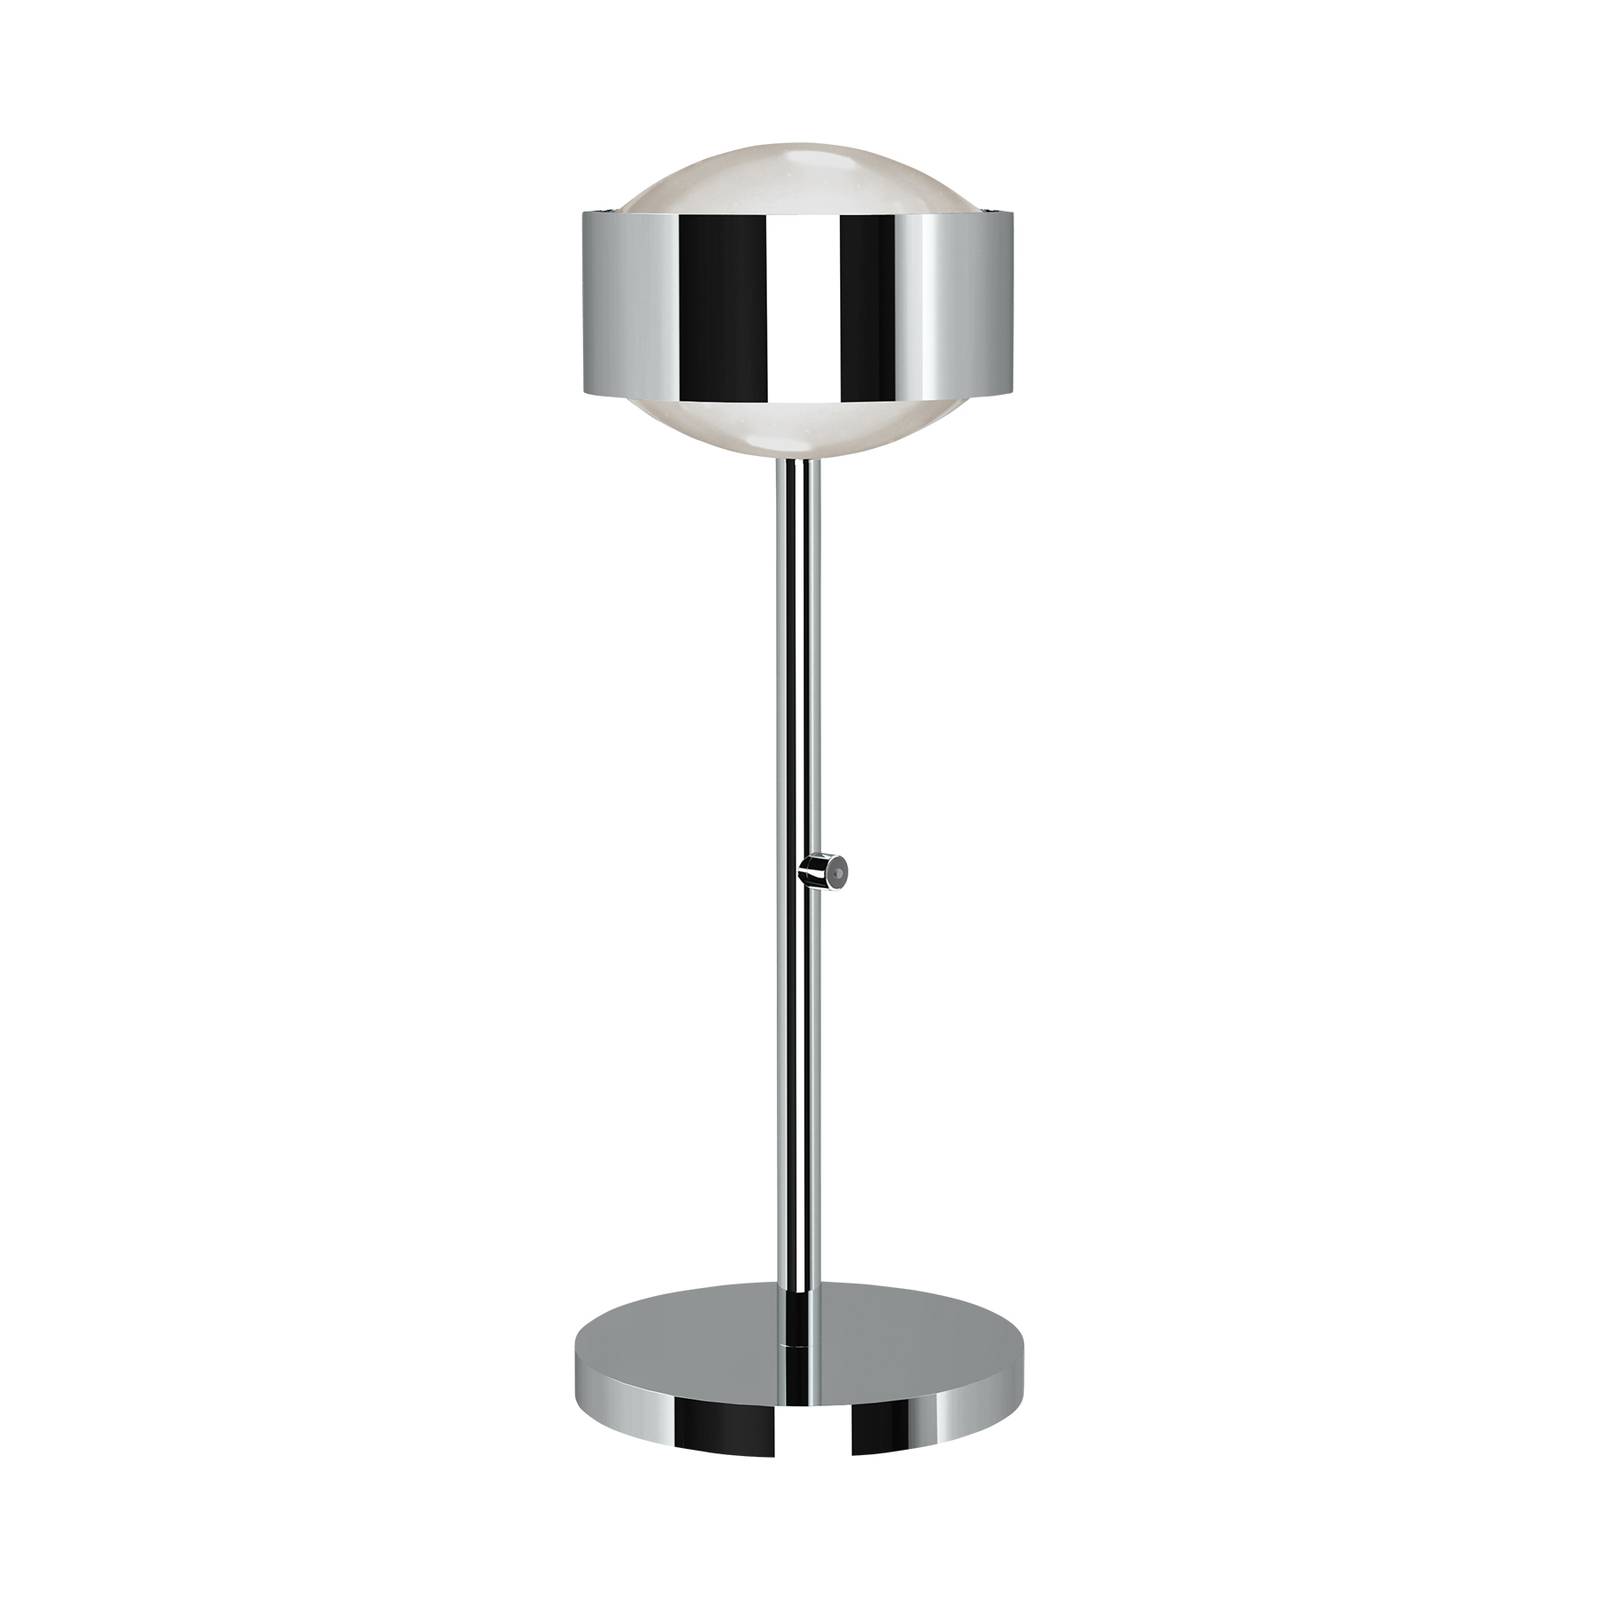 Top Light Puk Maxx Eye Table LED 37 cm matná čočka, chrom